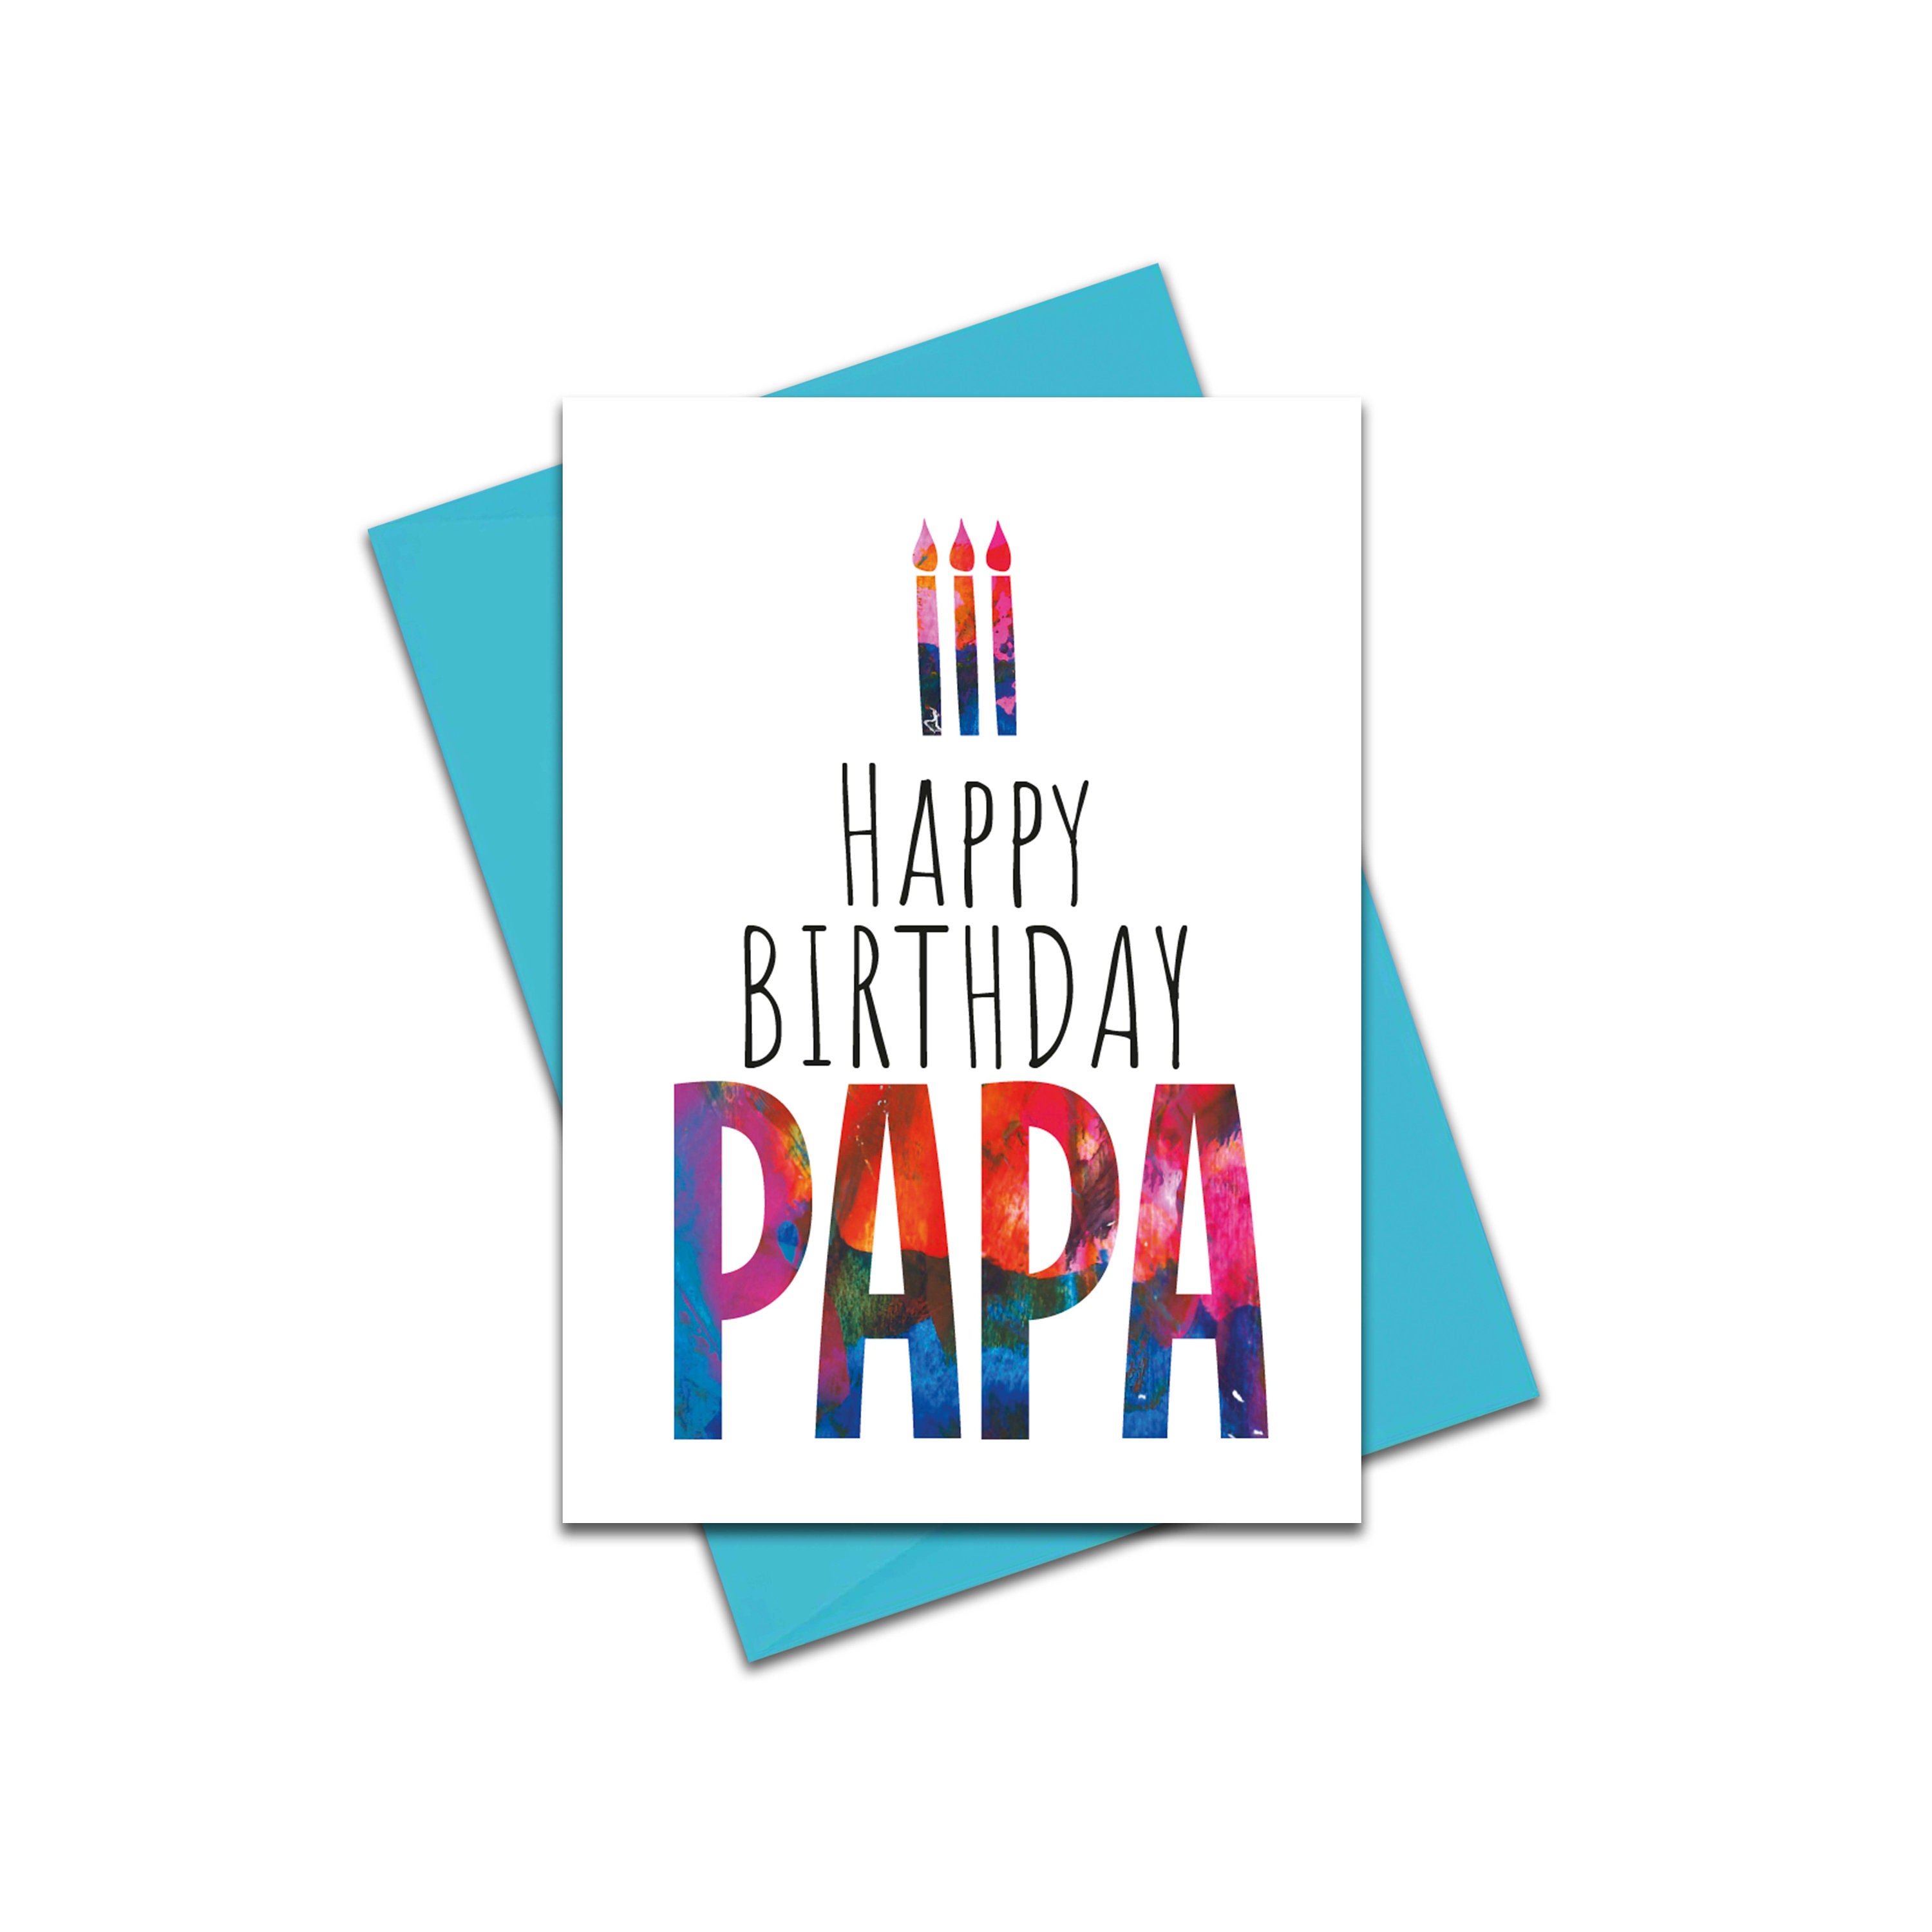 Printable Gift Cards Papa Johns